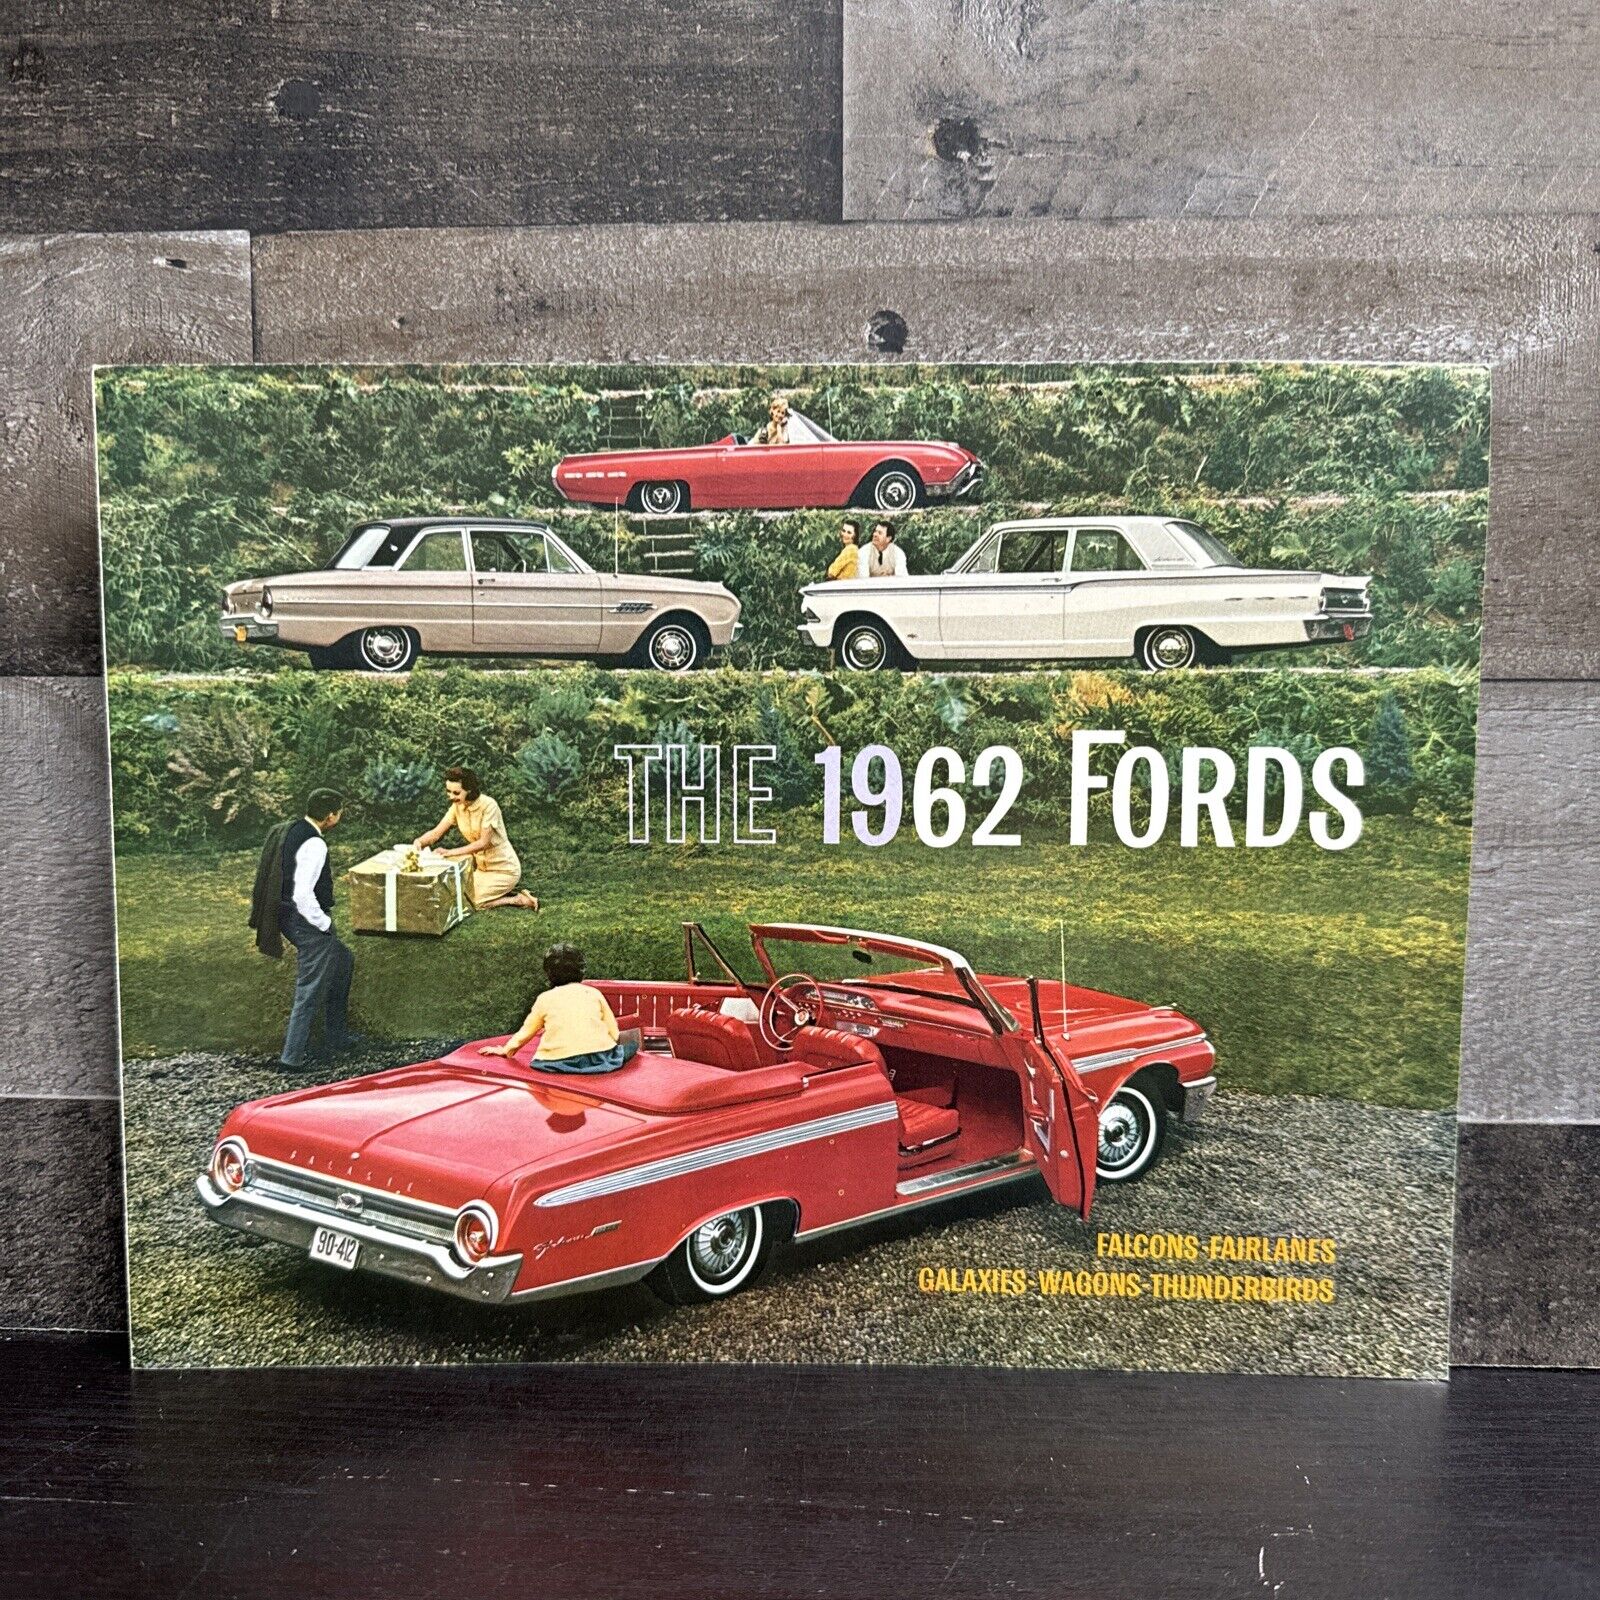 Original 1962 Ford car range brochure - Falcon Fairlane Galaxie Thunderbird